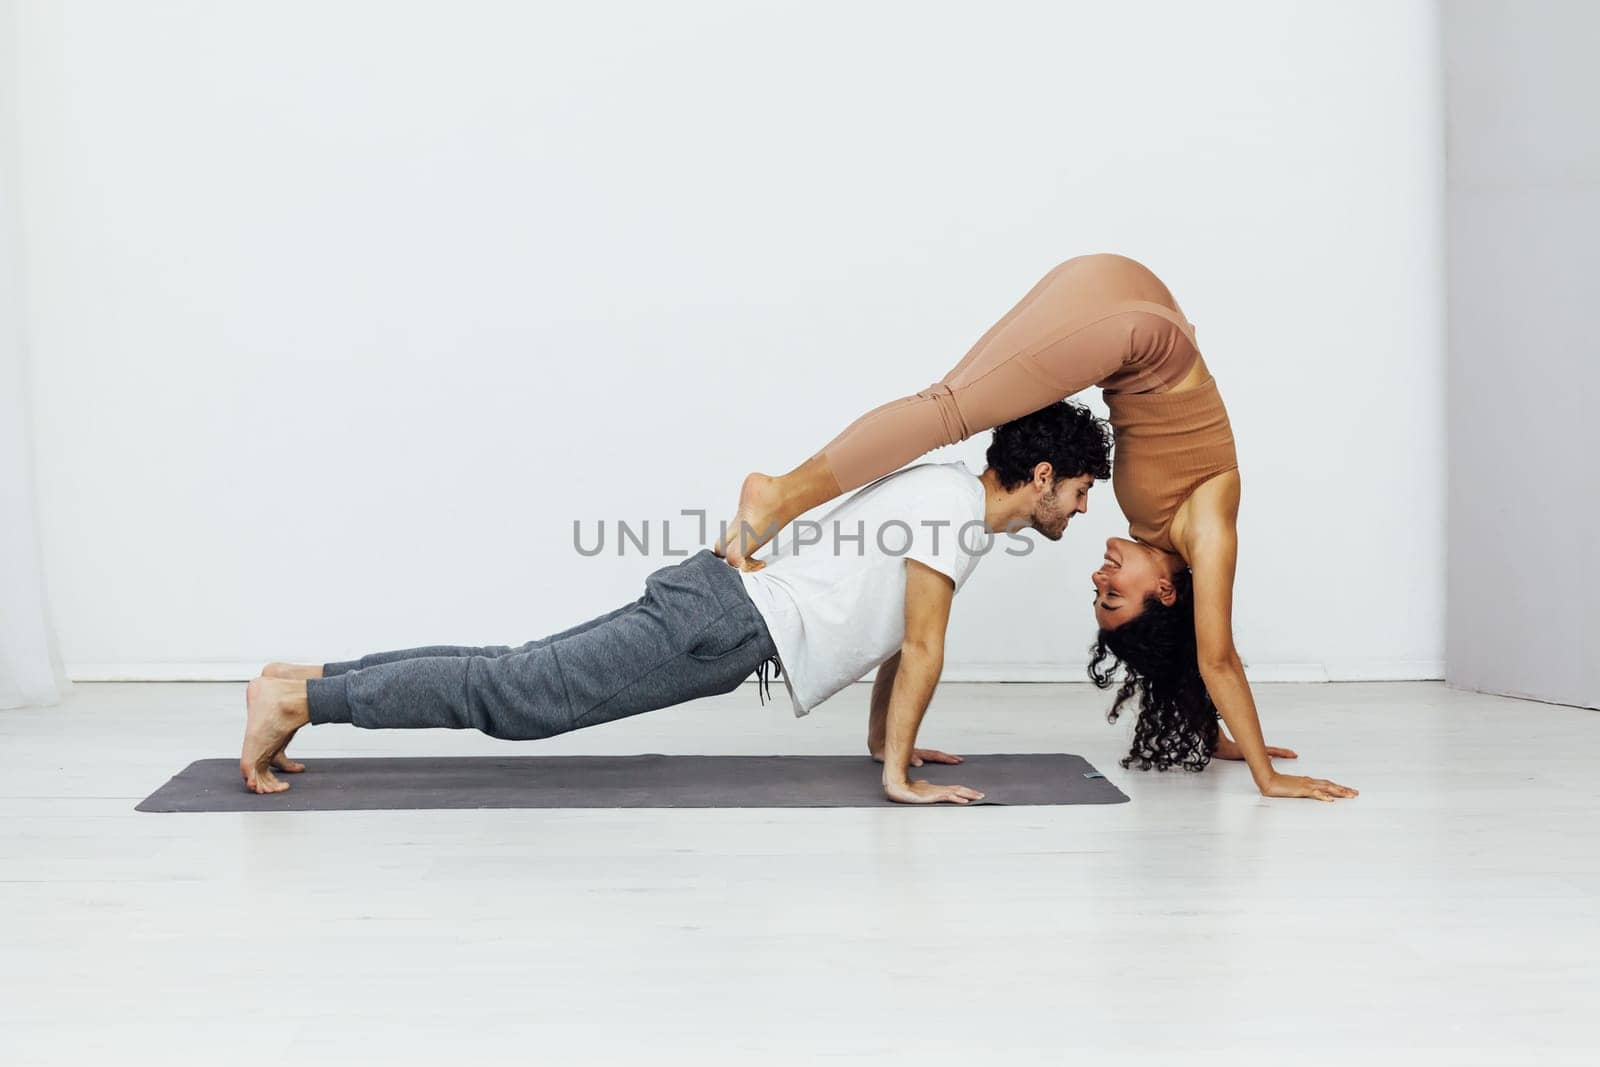 a yoga poses woman and man do gymnastics warm-up exercises asana flexible body